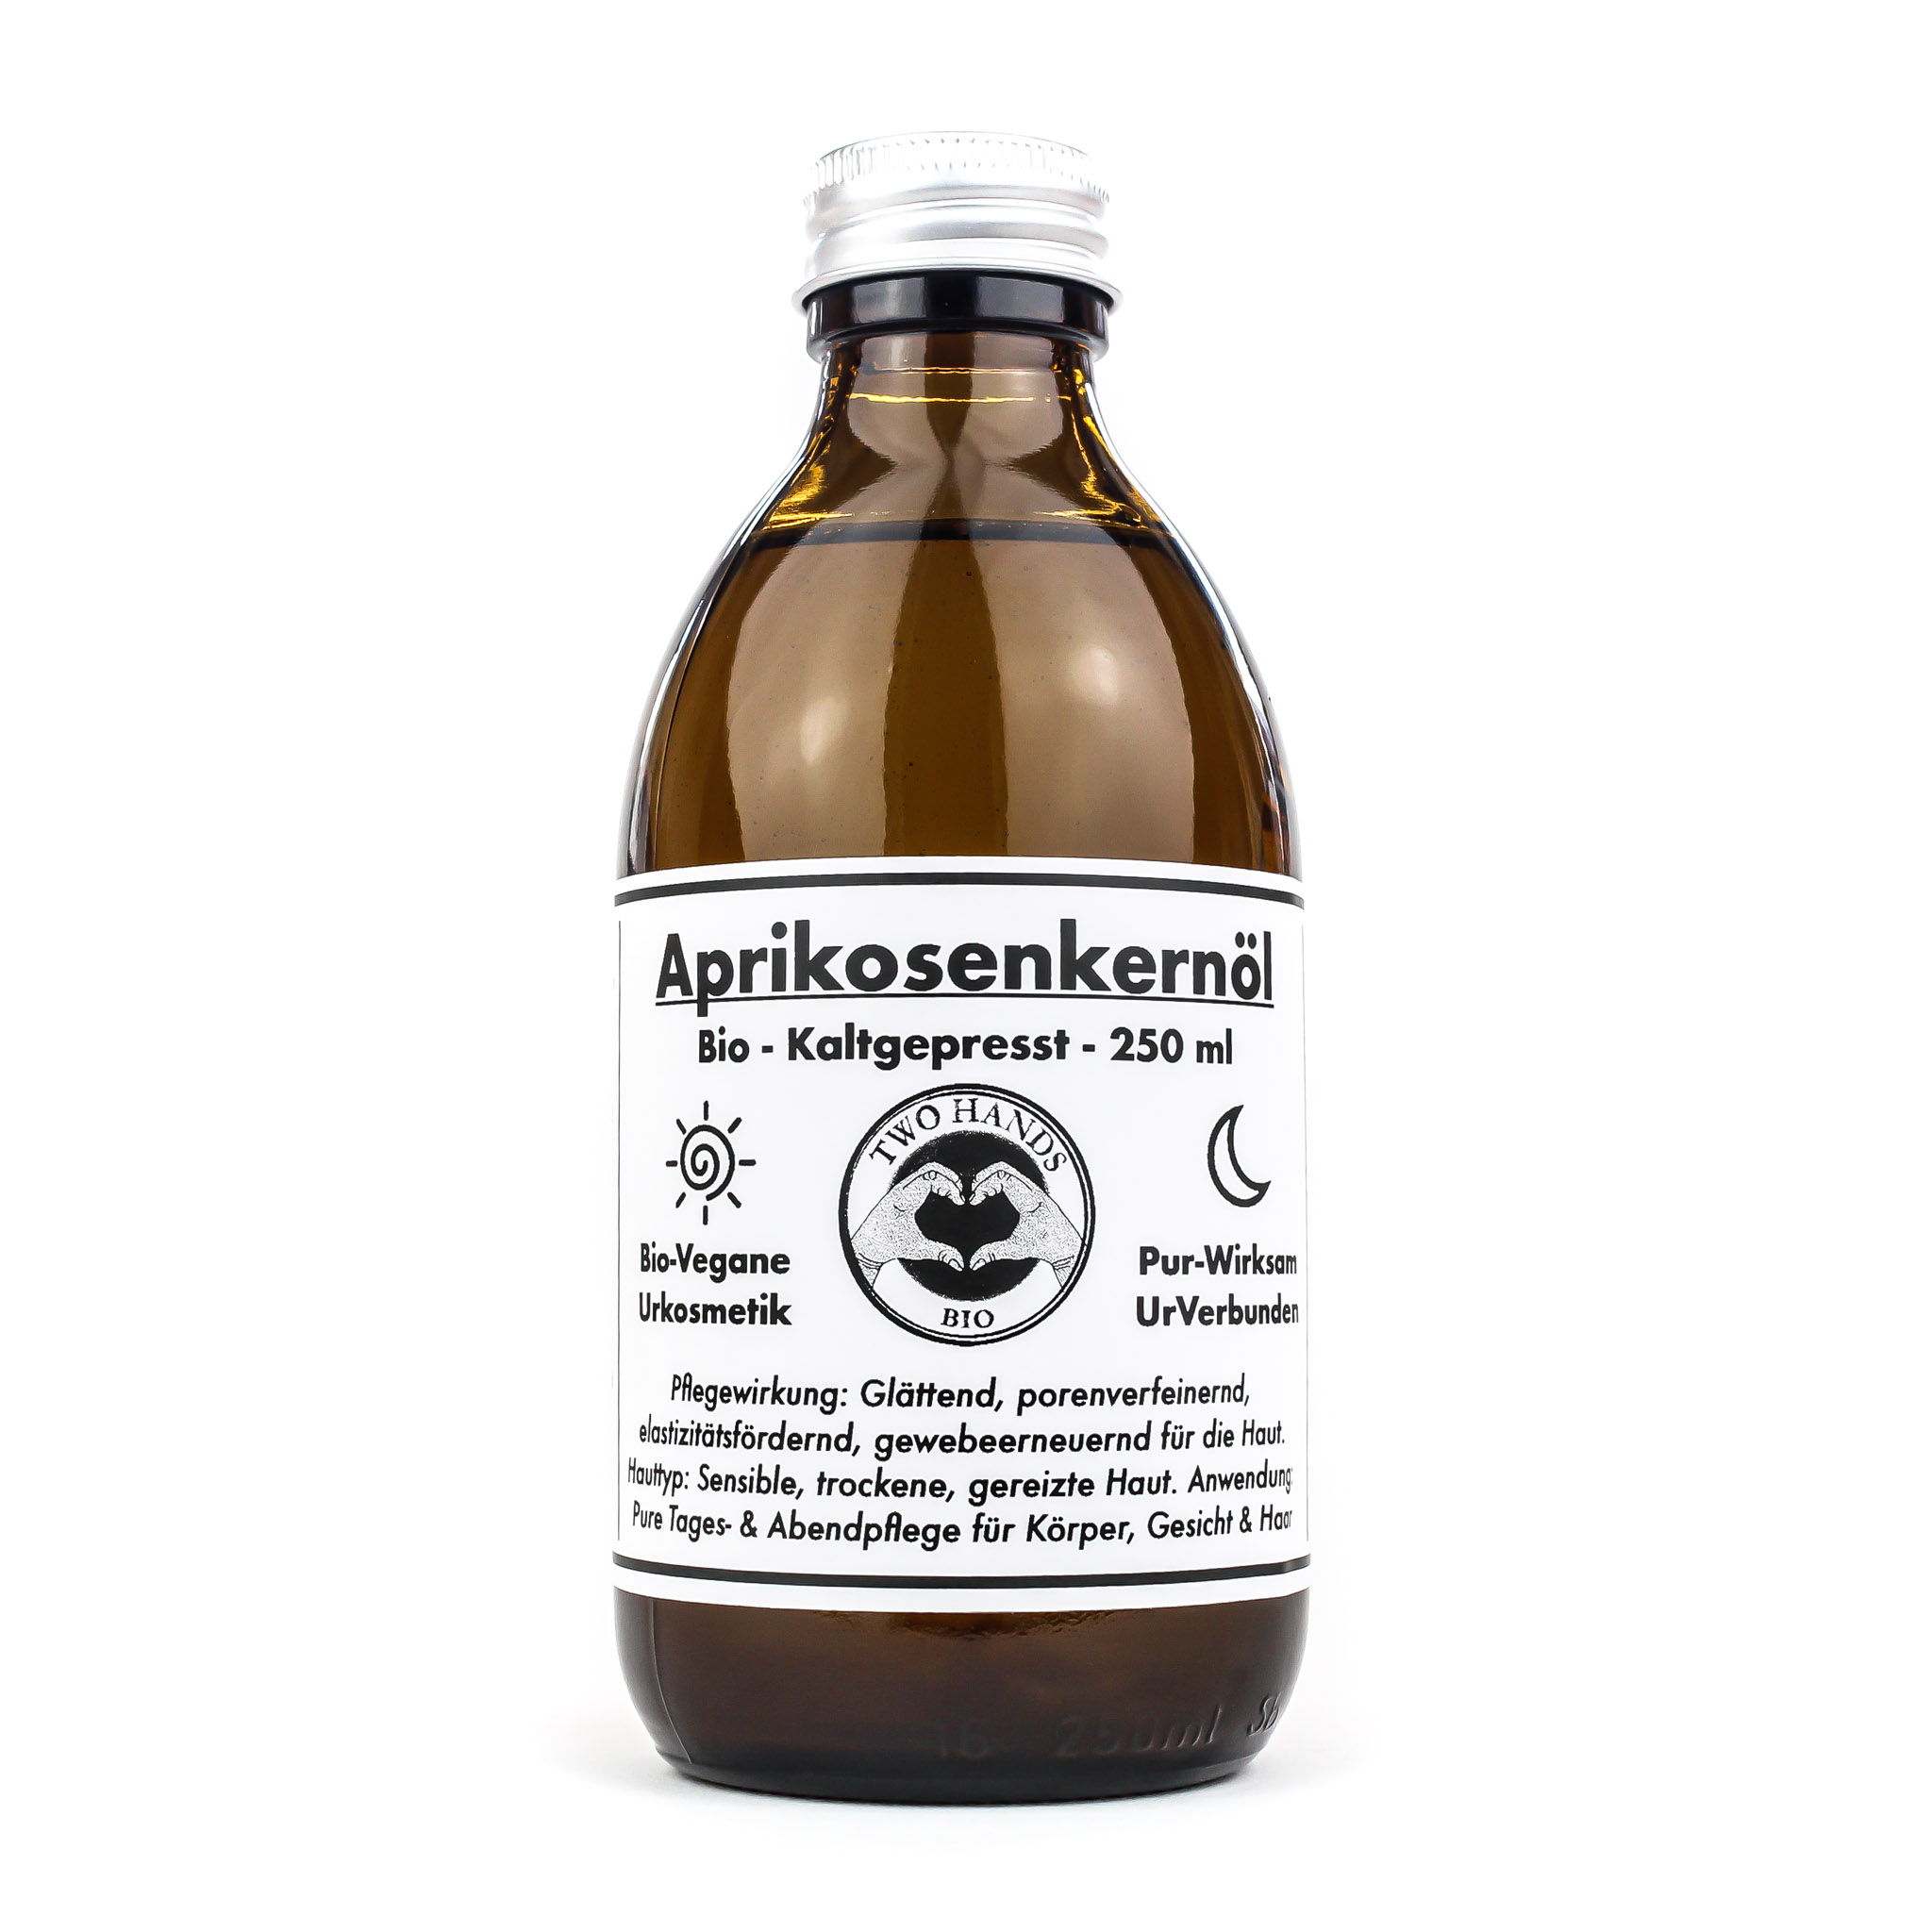 Aprikosenkernöl - Bio - Vegan - Kaltgepresst - 250 ml